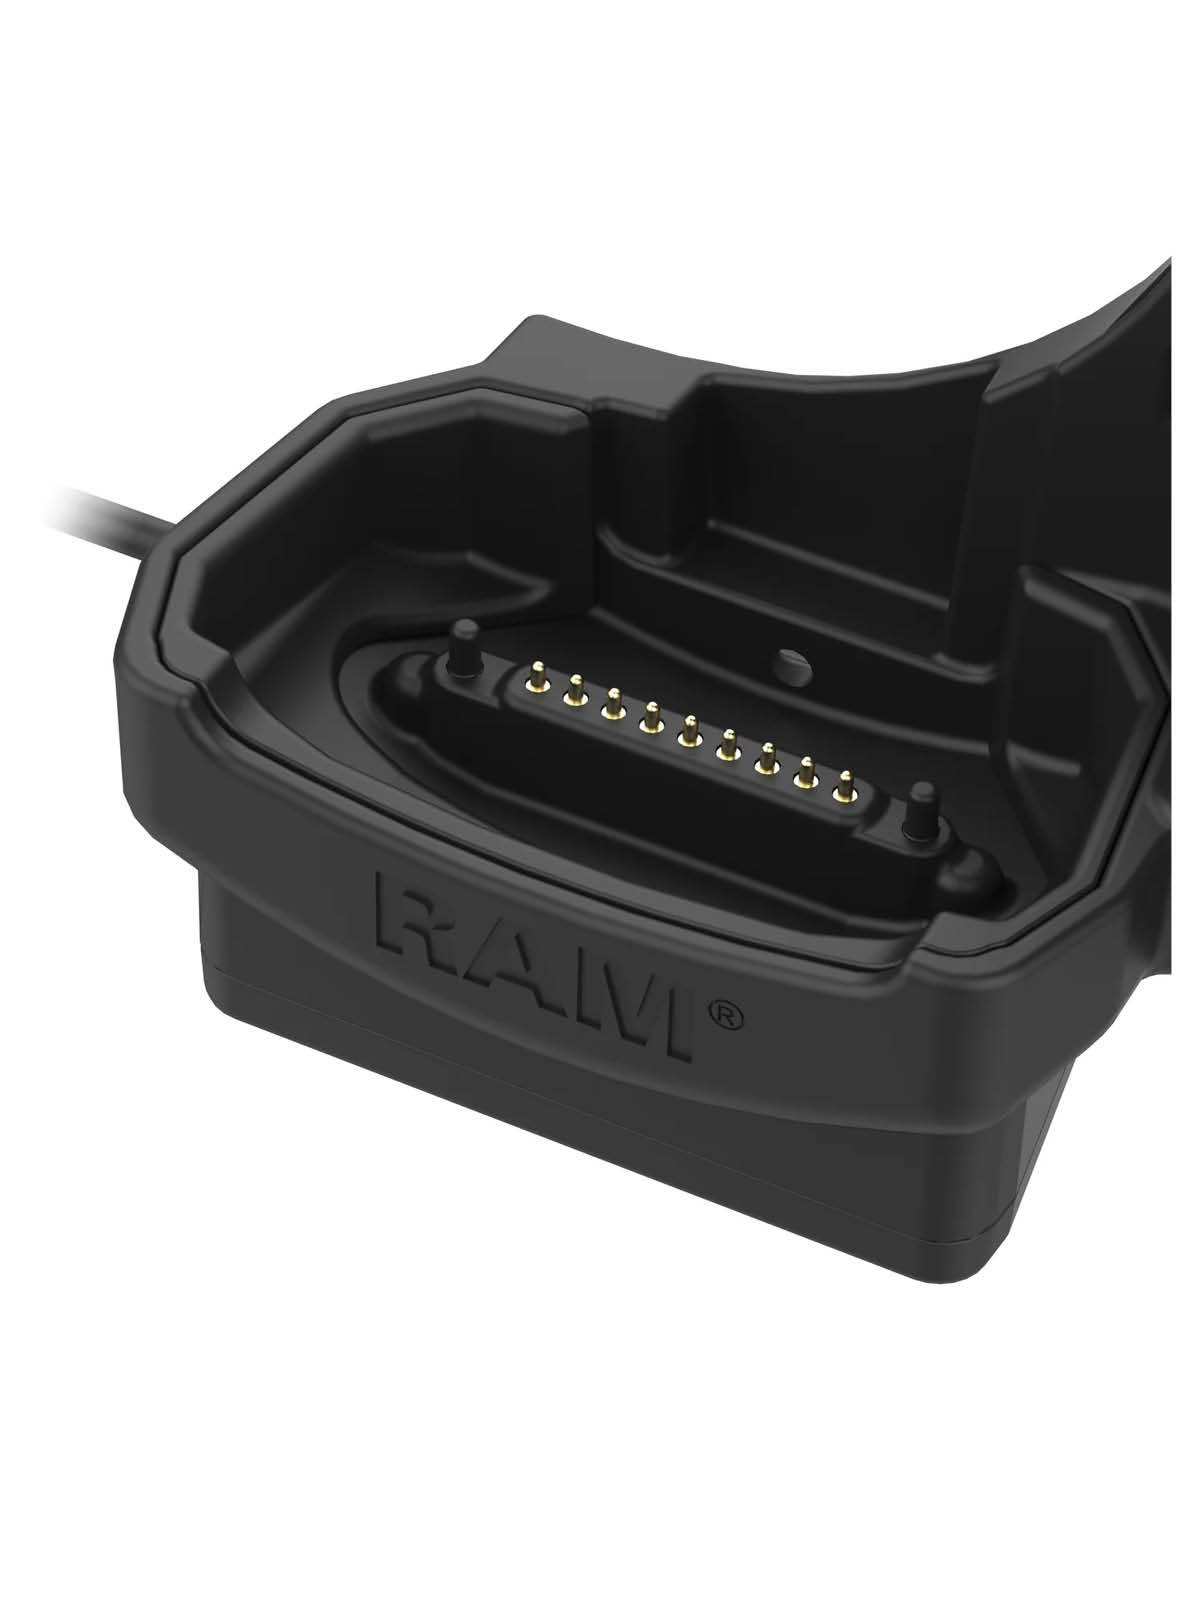 RAM Mounts Ladestation für Zebra MC9400/MC9300 - abschließbar (Schlüssel), beheizte Pins, 5,5 mm Klinke Eingang, USB-A Ausgang, 2-Loch AMPS Aufnahme